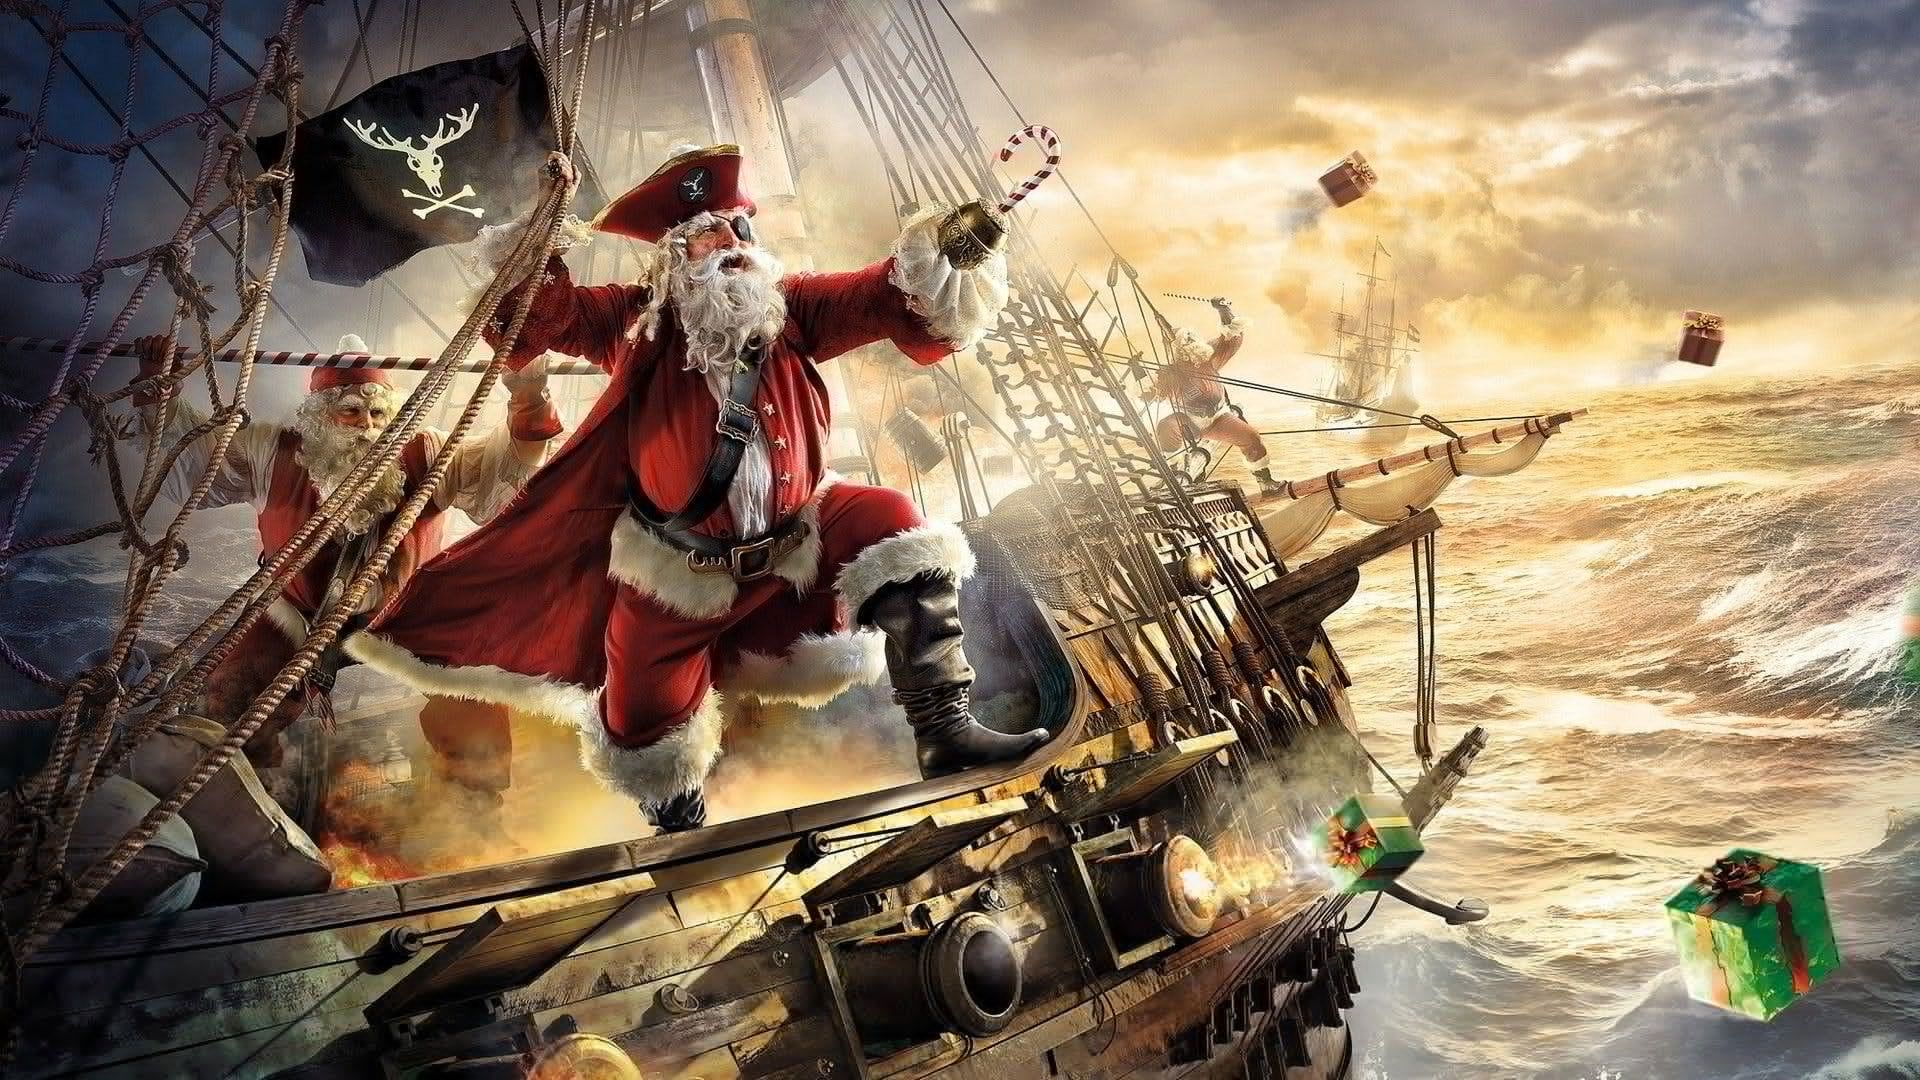 Santa claus on a pirate ship - Pirate